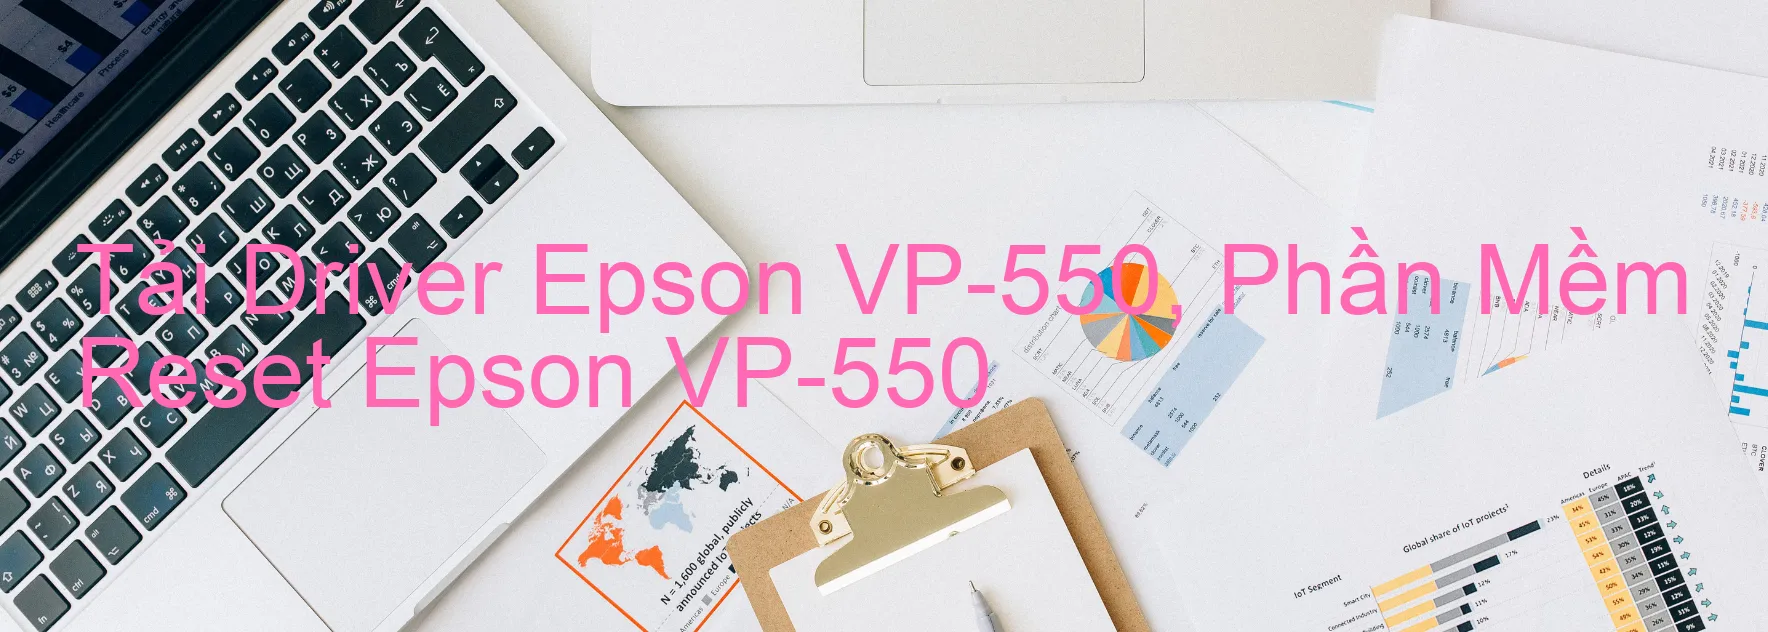 Driver Epson VP-550, Phần Mềm Reset Epson VP-550